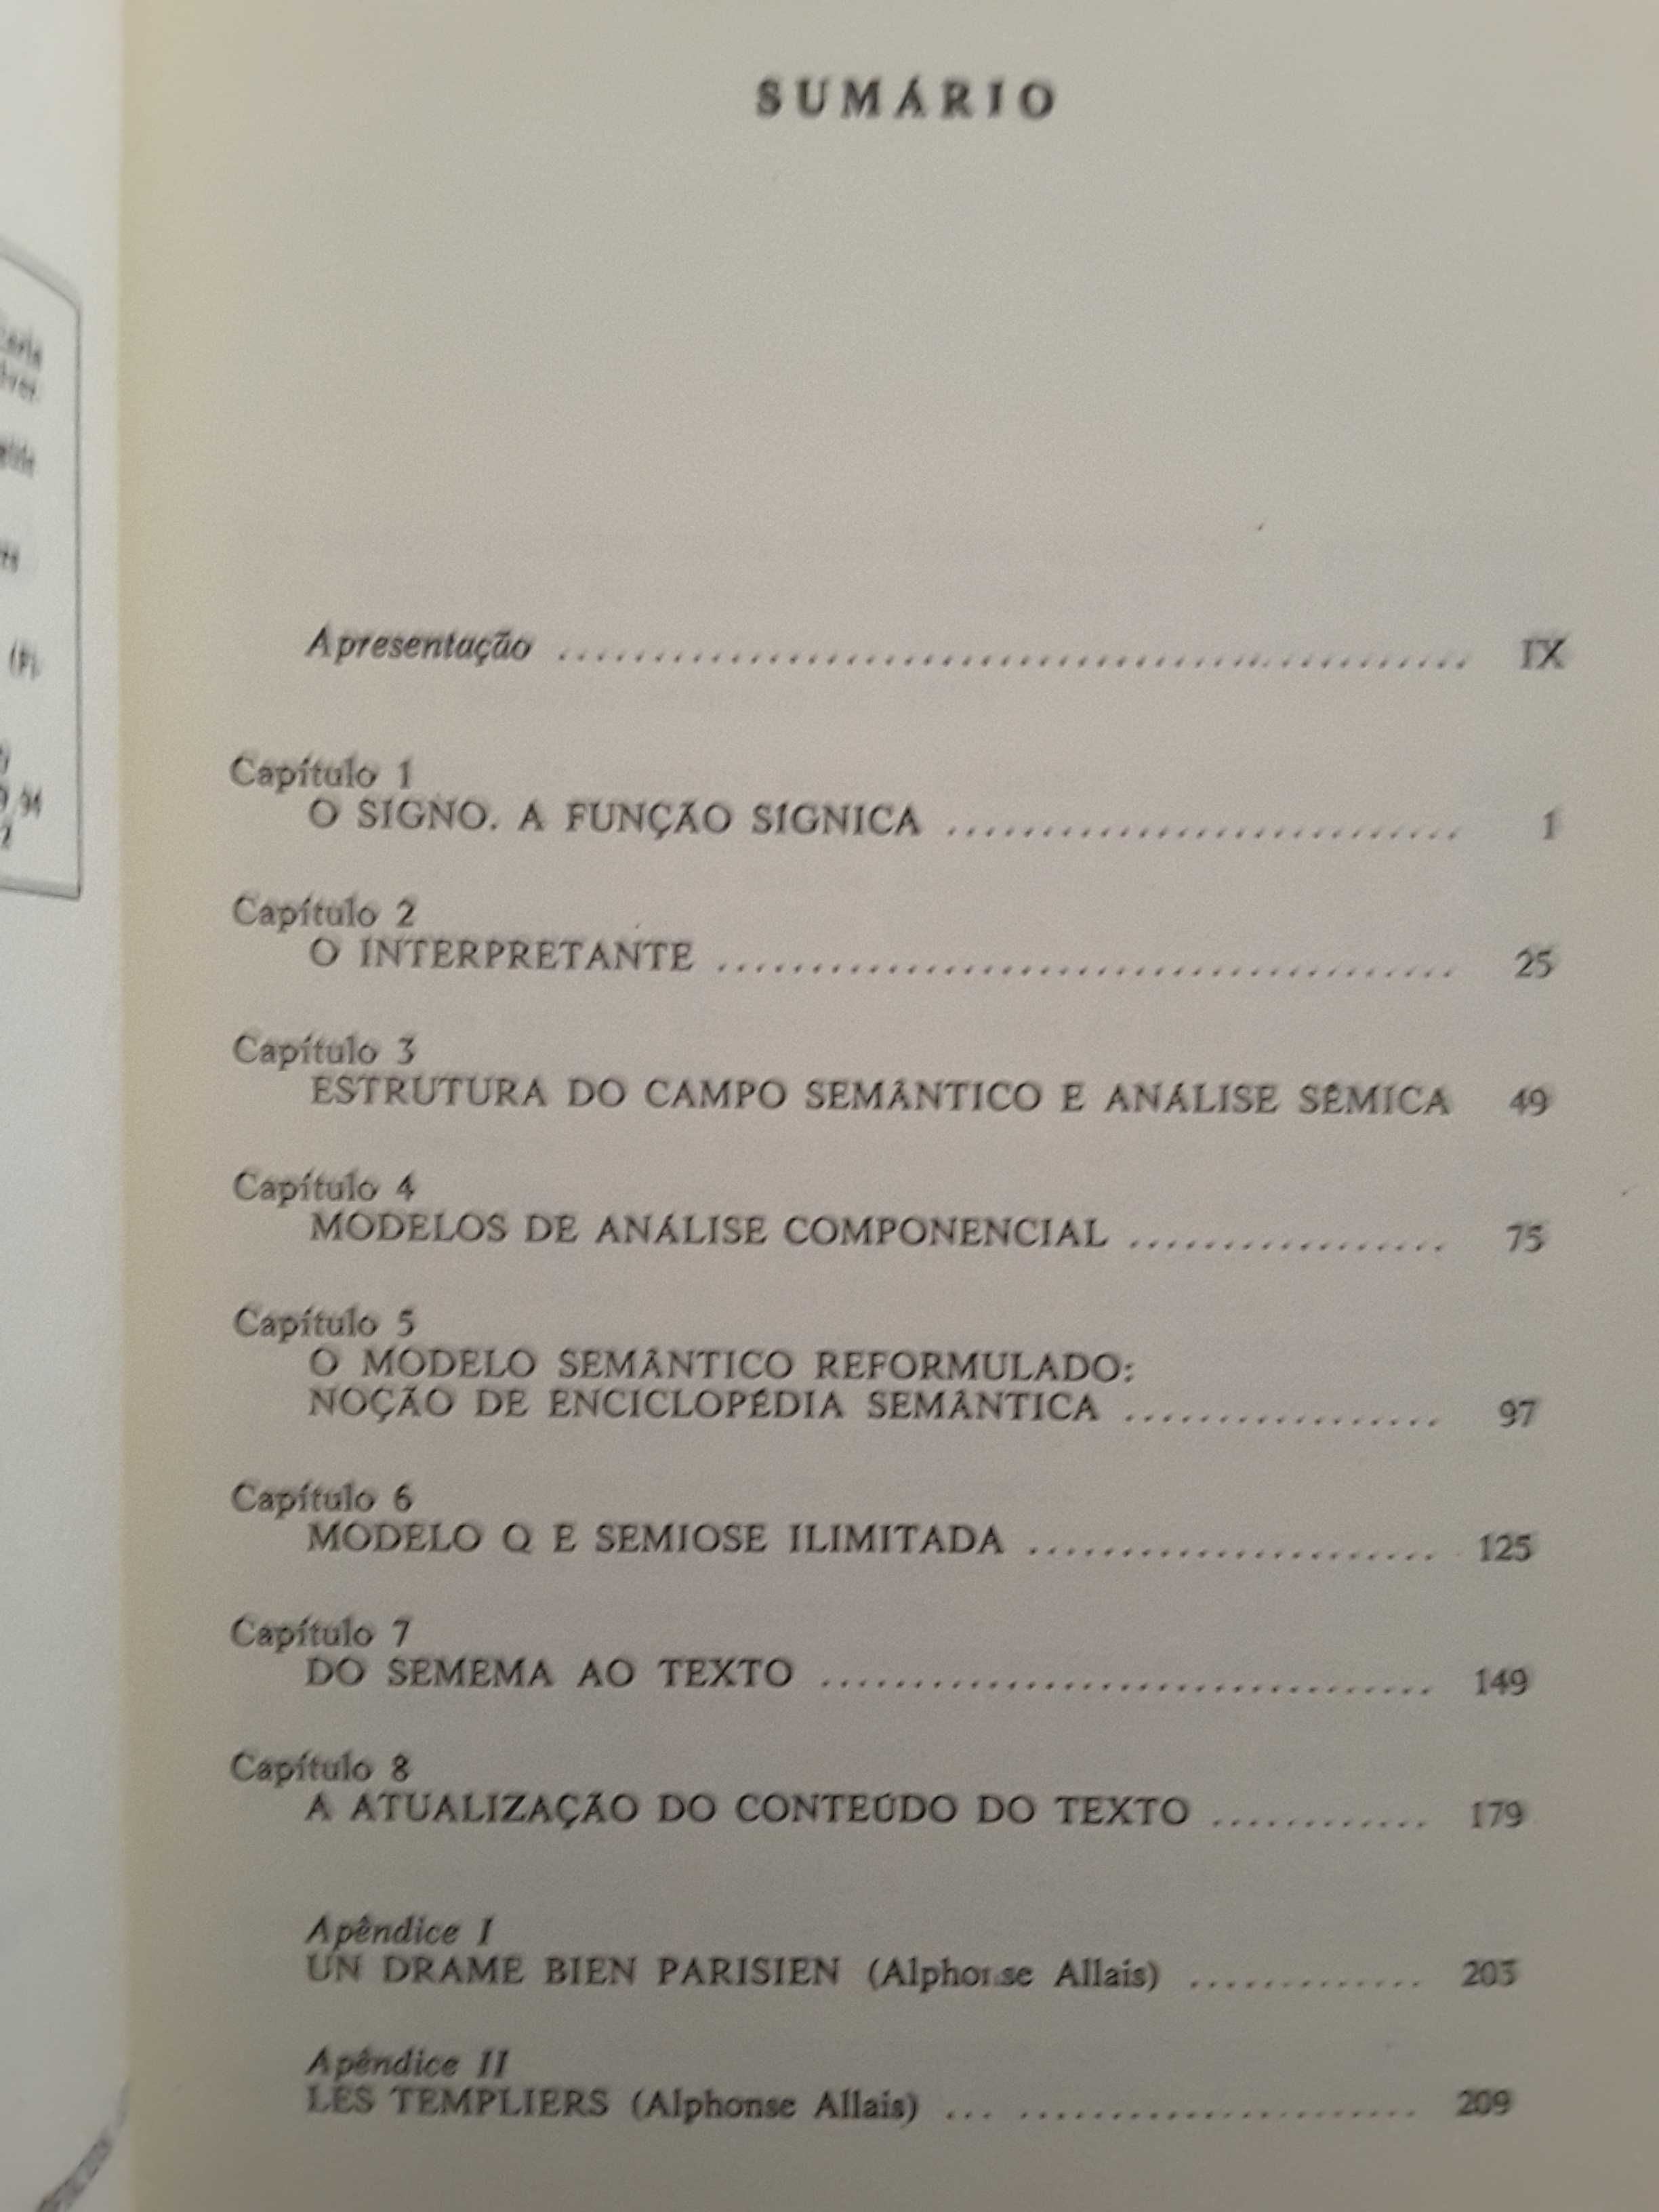 Umberto Eco/ Contos de Andersen/ Estudo do Fantástico no Romance